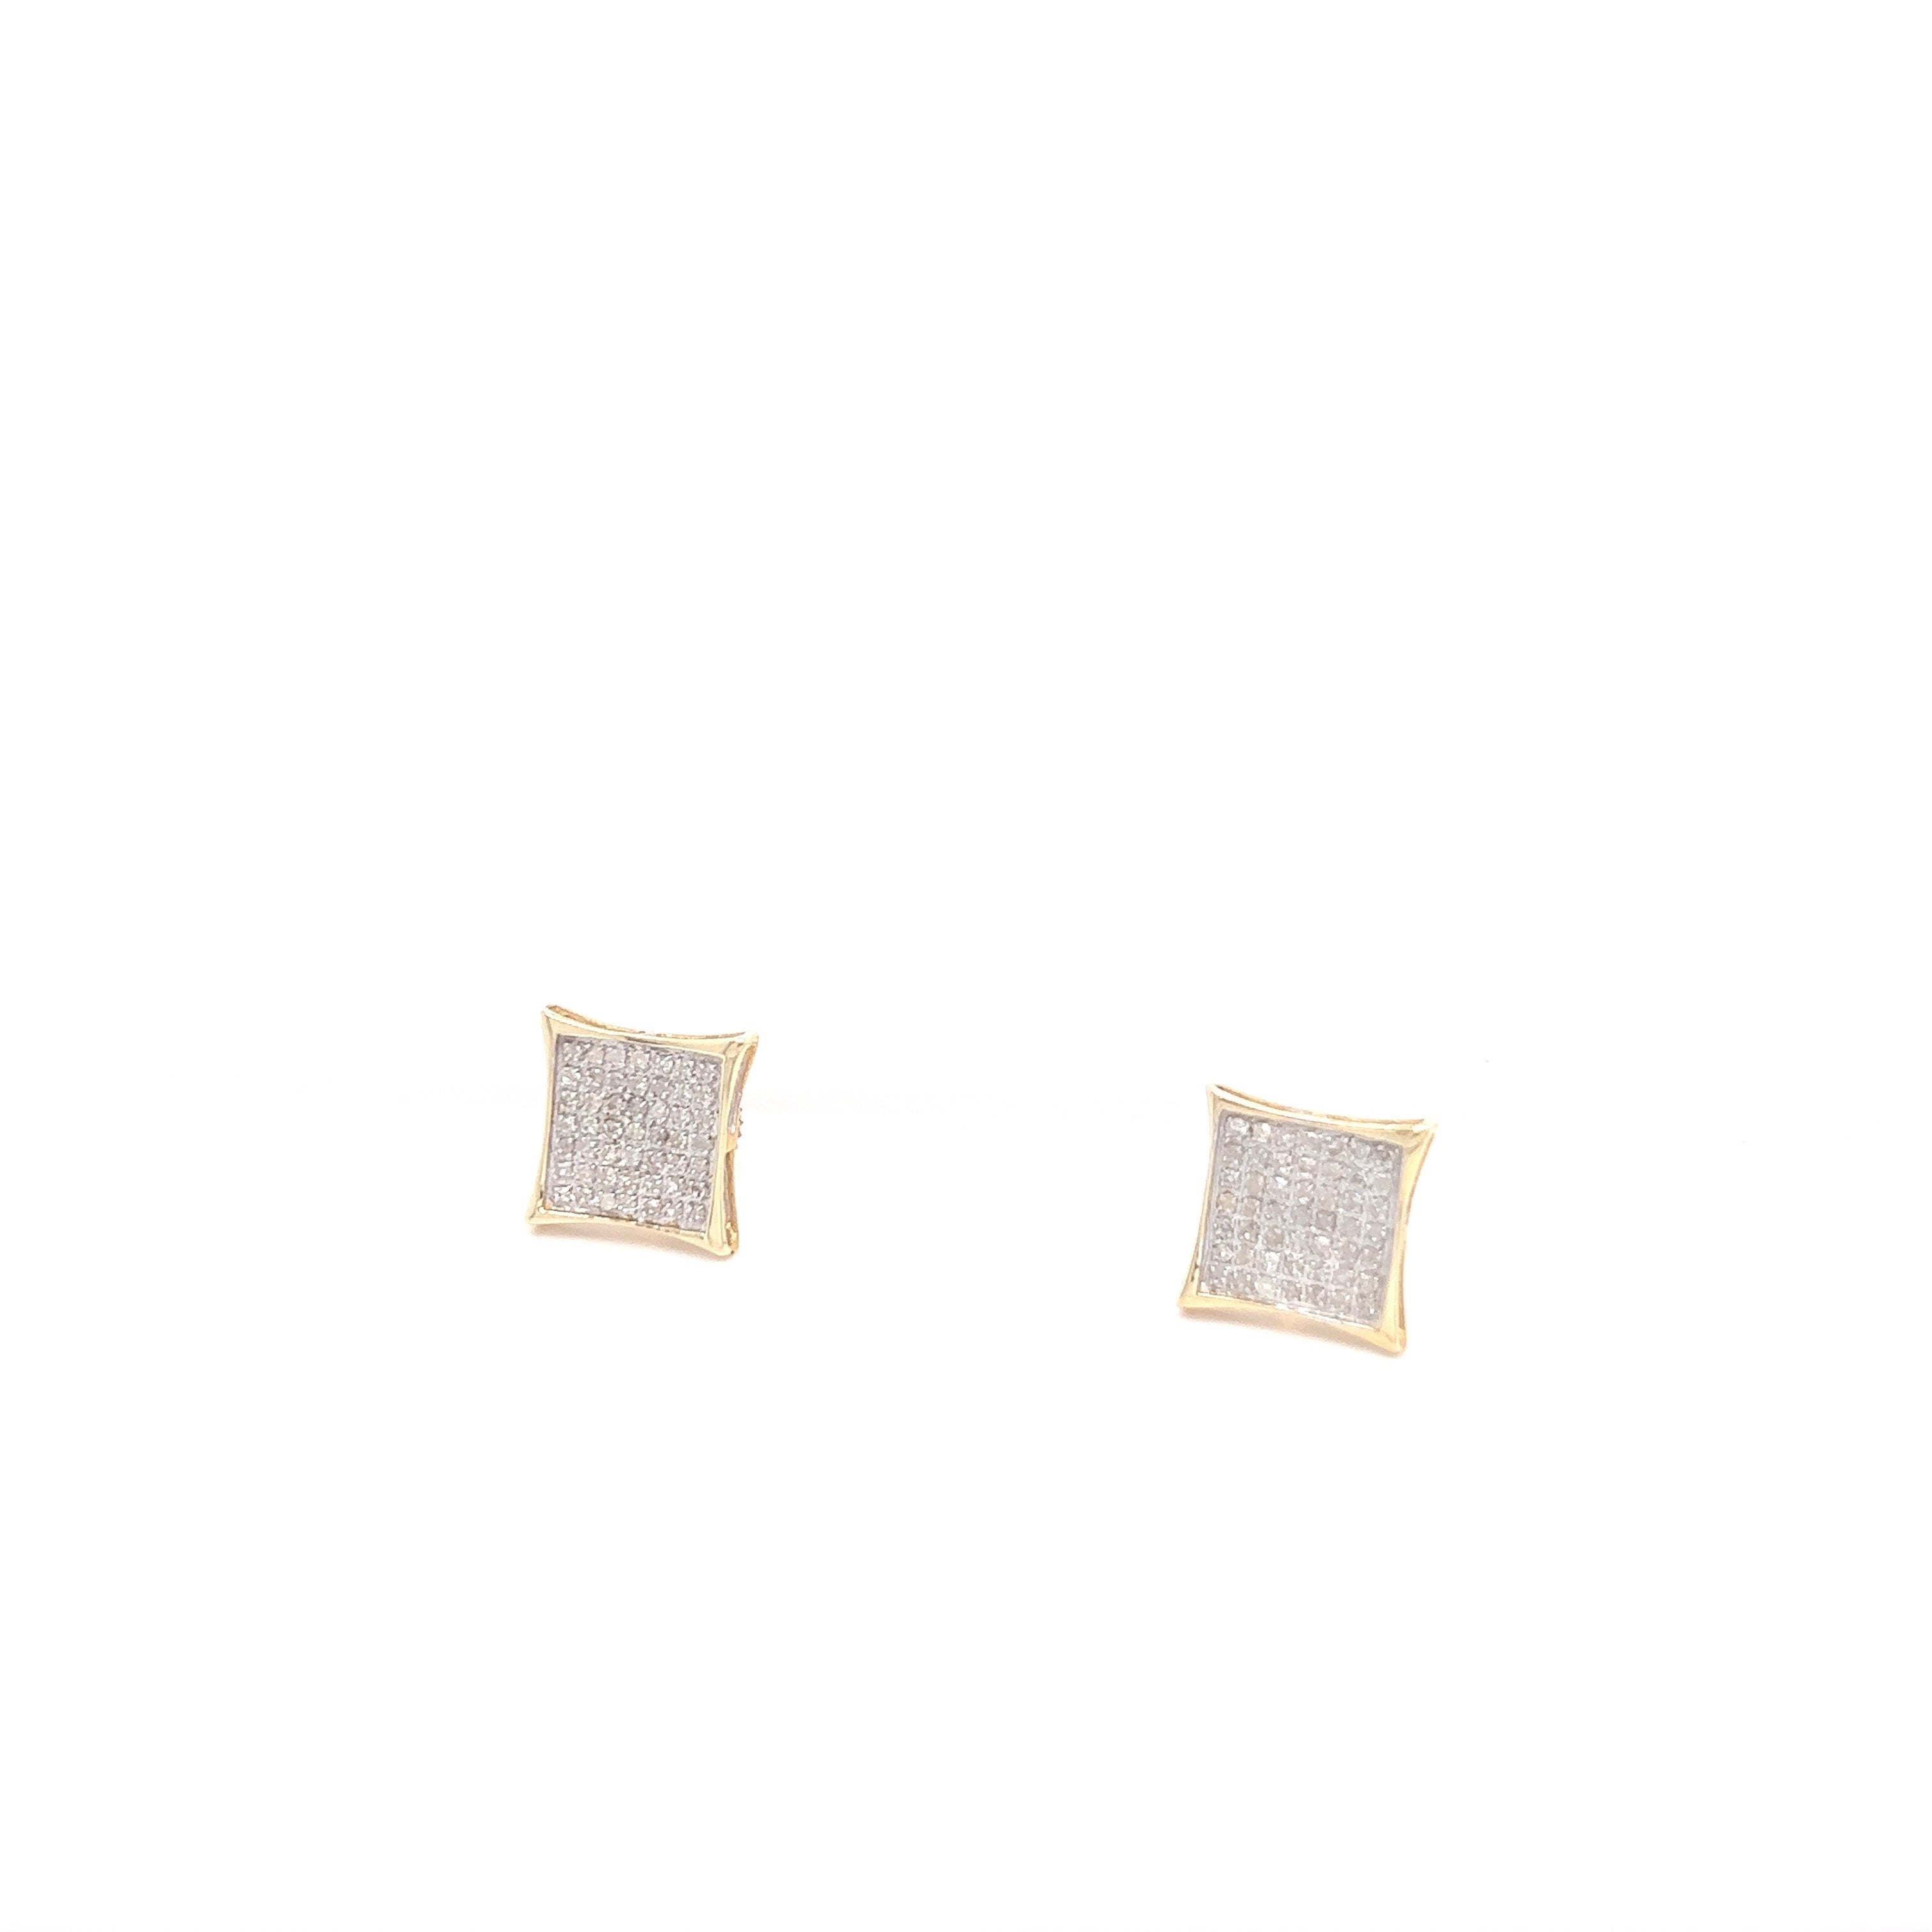 Diamond studs earrings